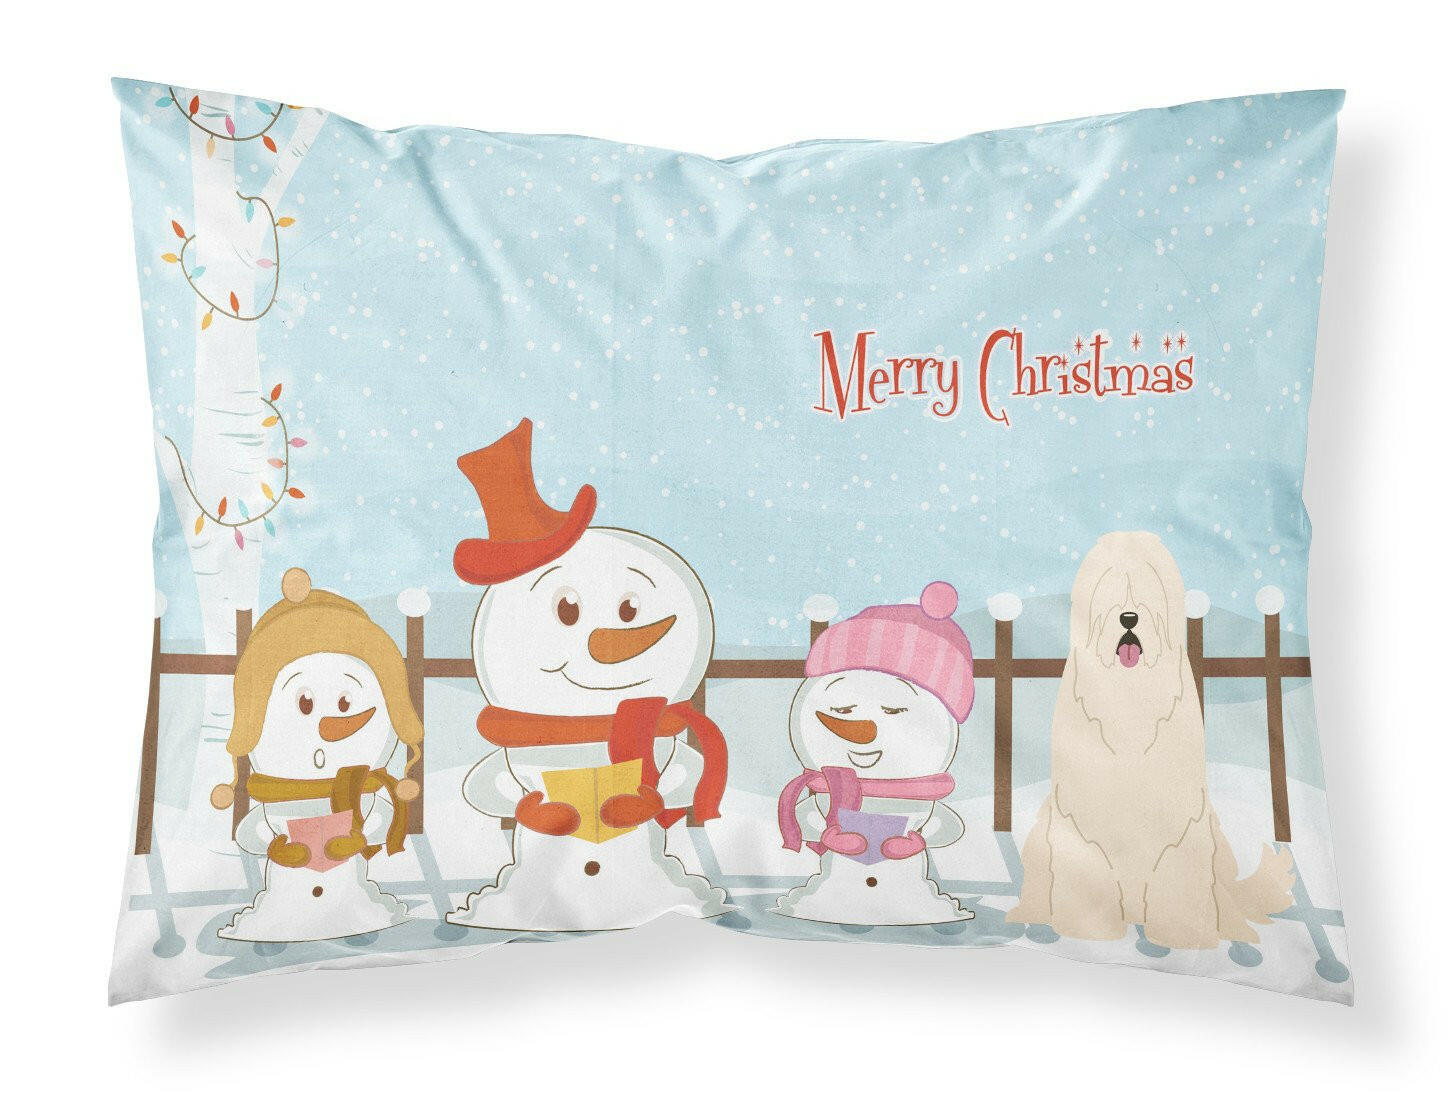 Merry Christmas Carolers South Russian Sheepdog Fabric Standard Pillowcase BB2355PILLOWCASE by Caroline's Treasures